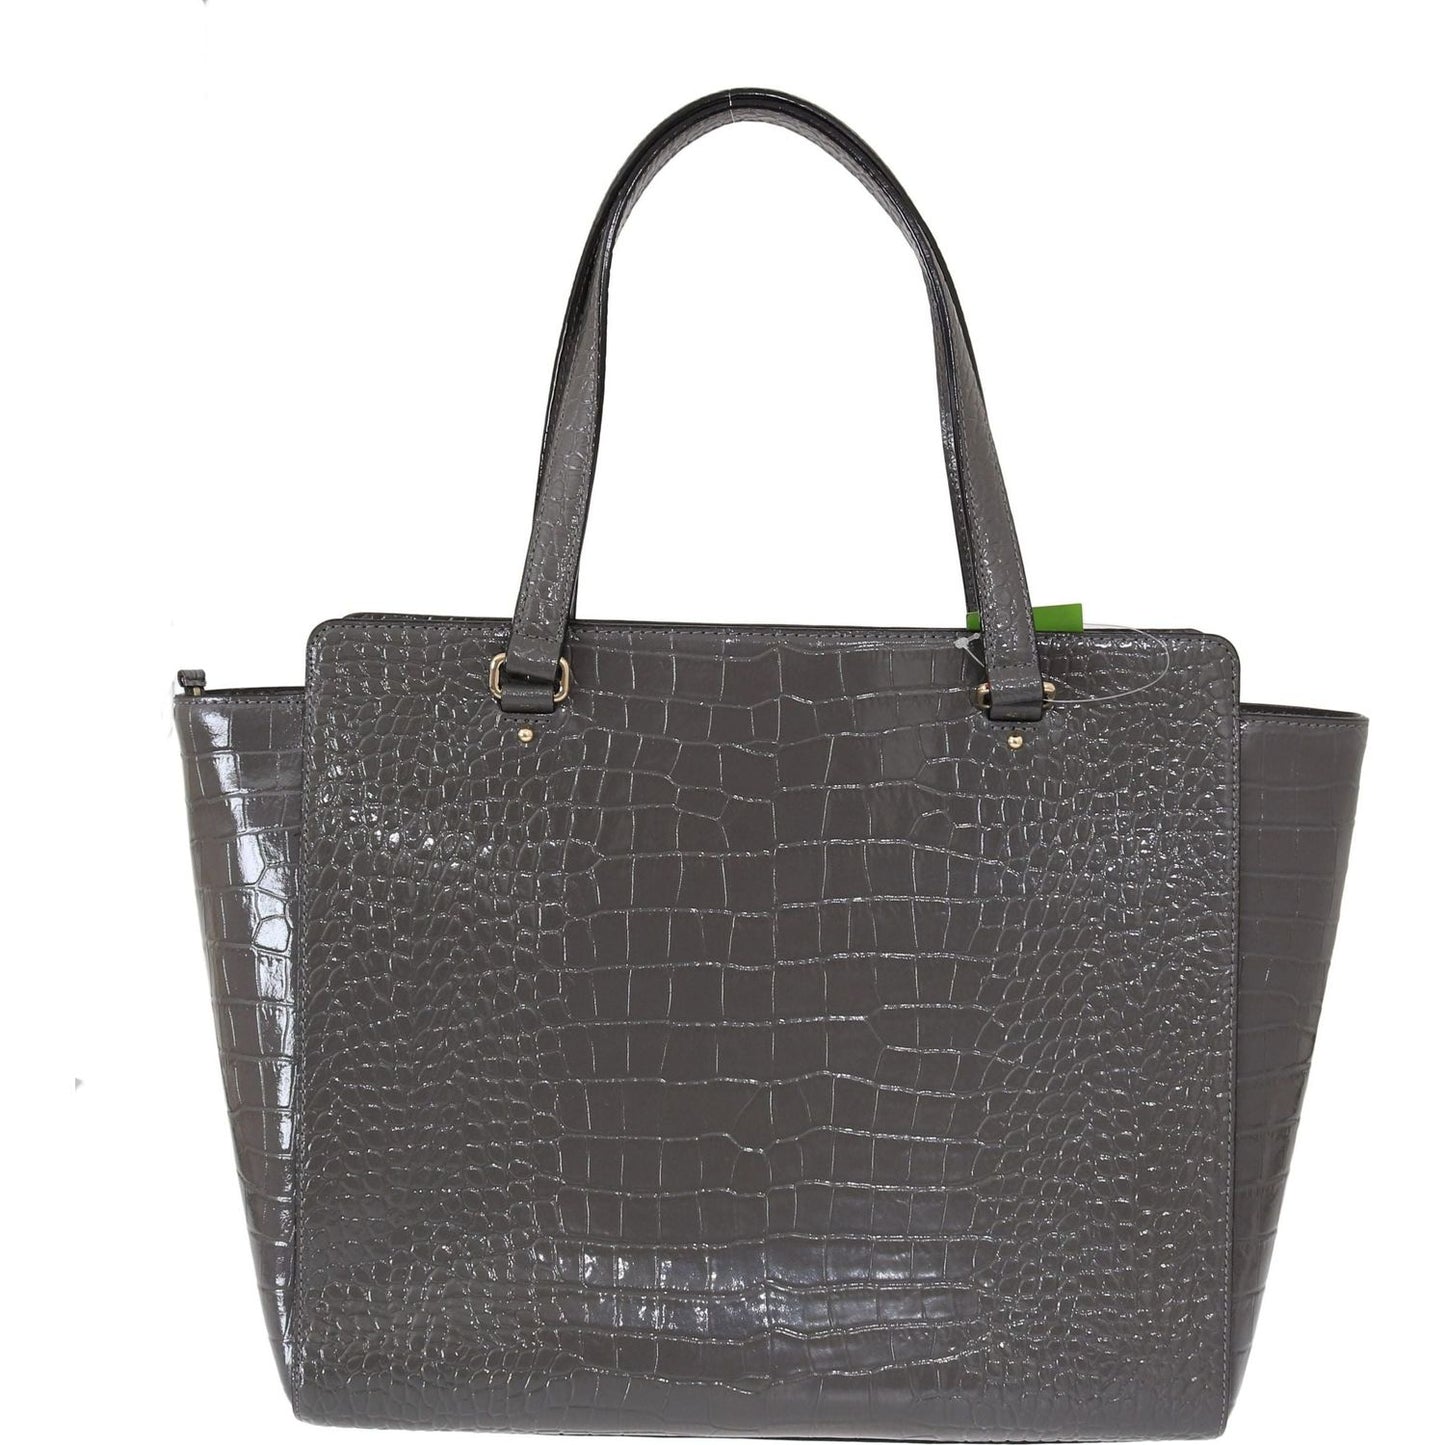 Kate Spade Chic Elissa Gray Leather Handbag gray-elissa-bristol-drive-croc-hand-bag WOMAN HANDBAG IMG_9248-1-scaled-c6393758-0d1.jpg